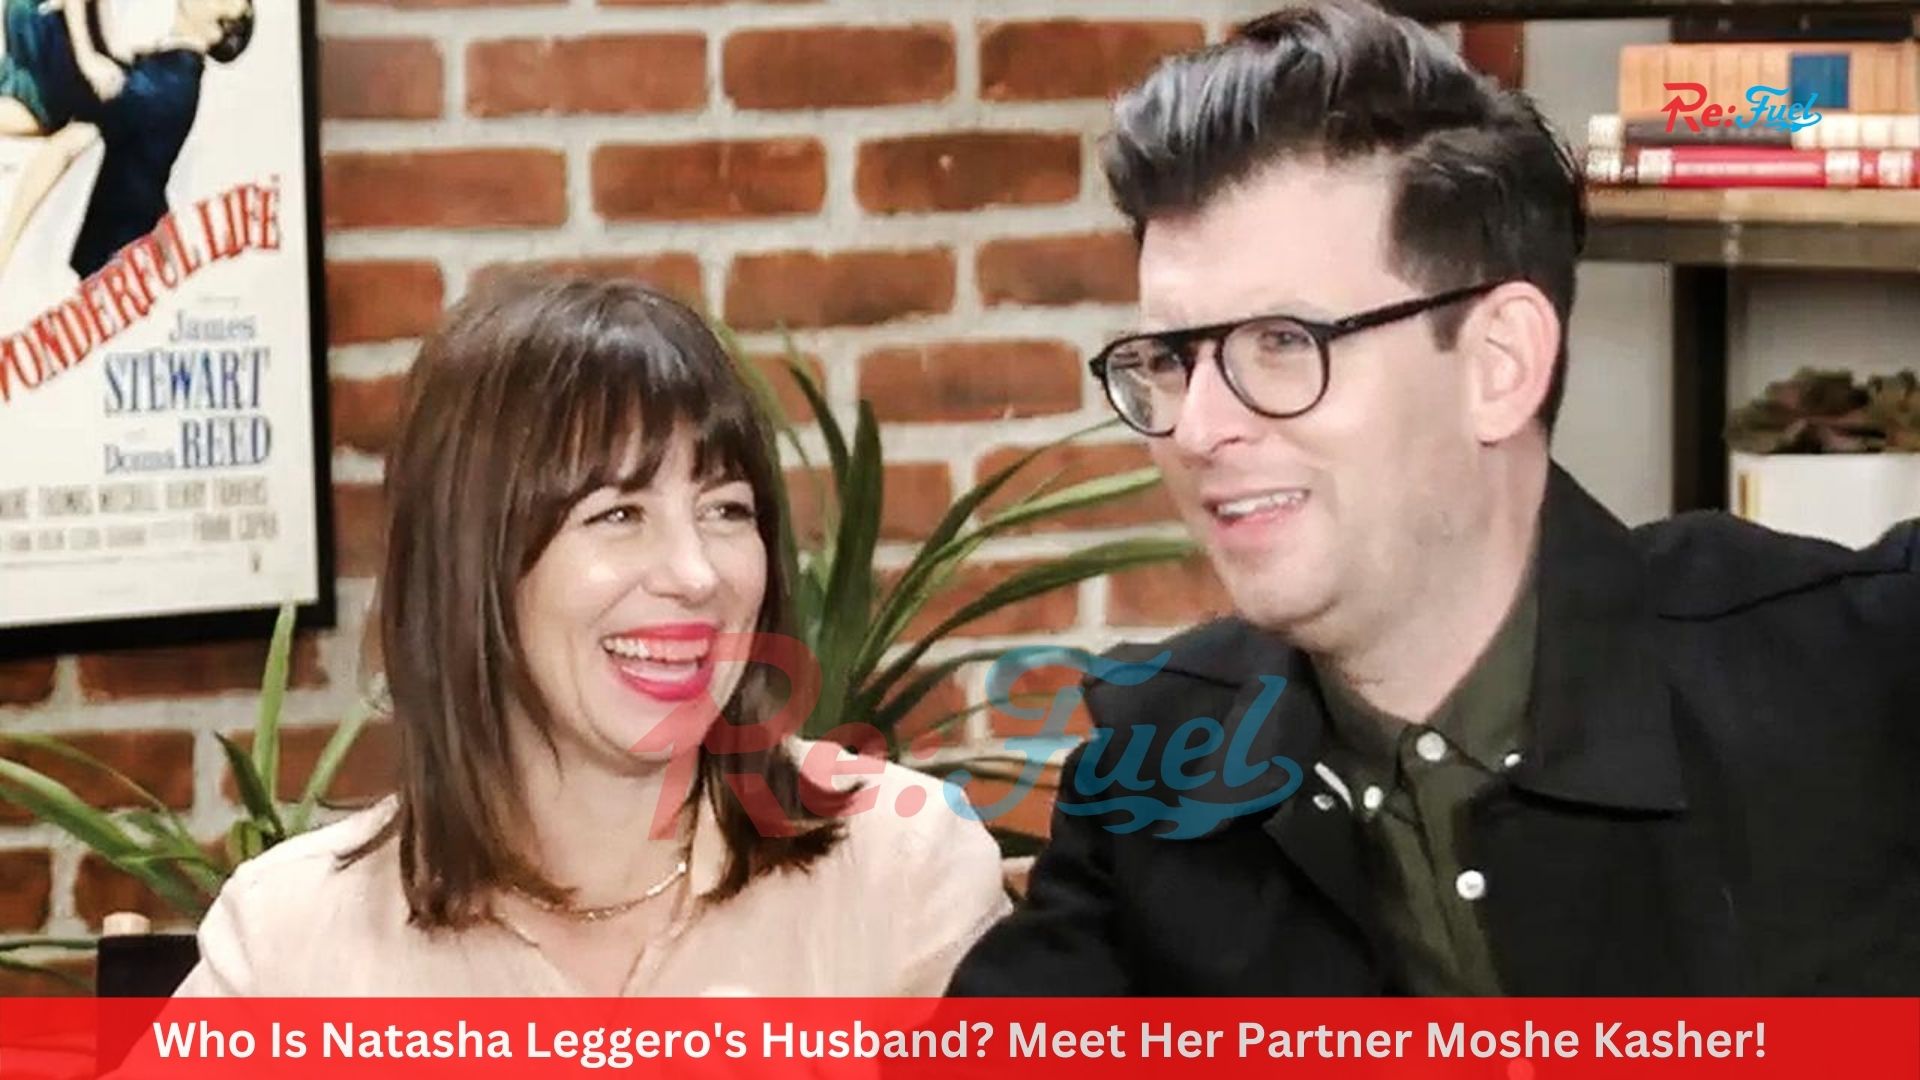 Who Is Natasha Leggero's Husband? Meet Her Partner Moshe Kasher!